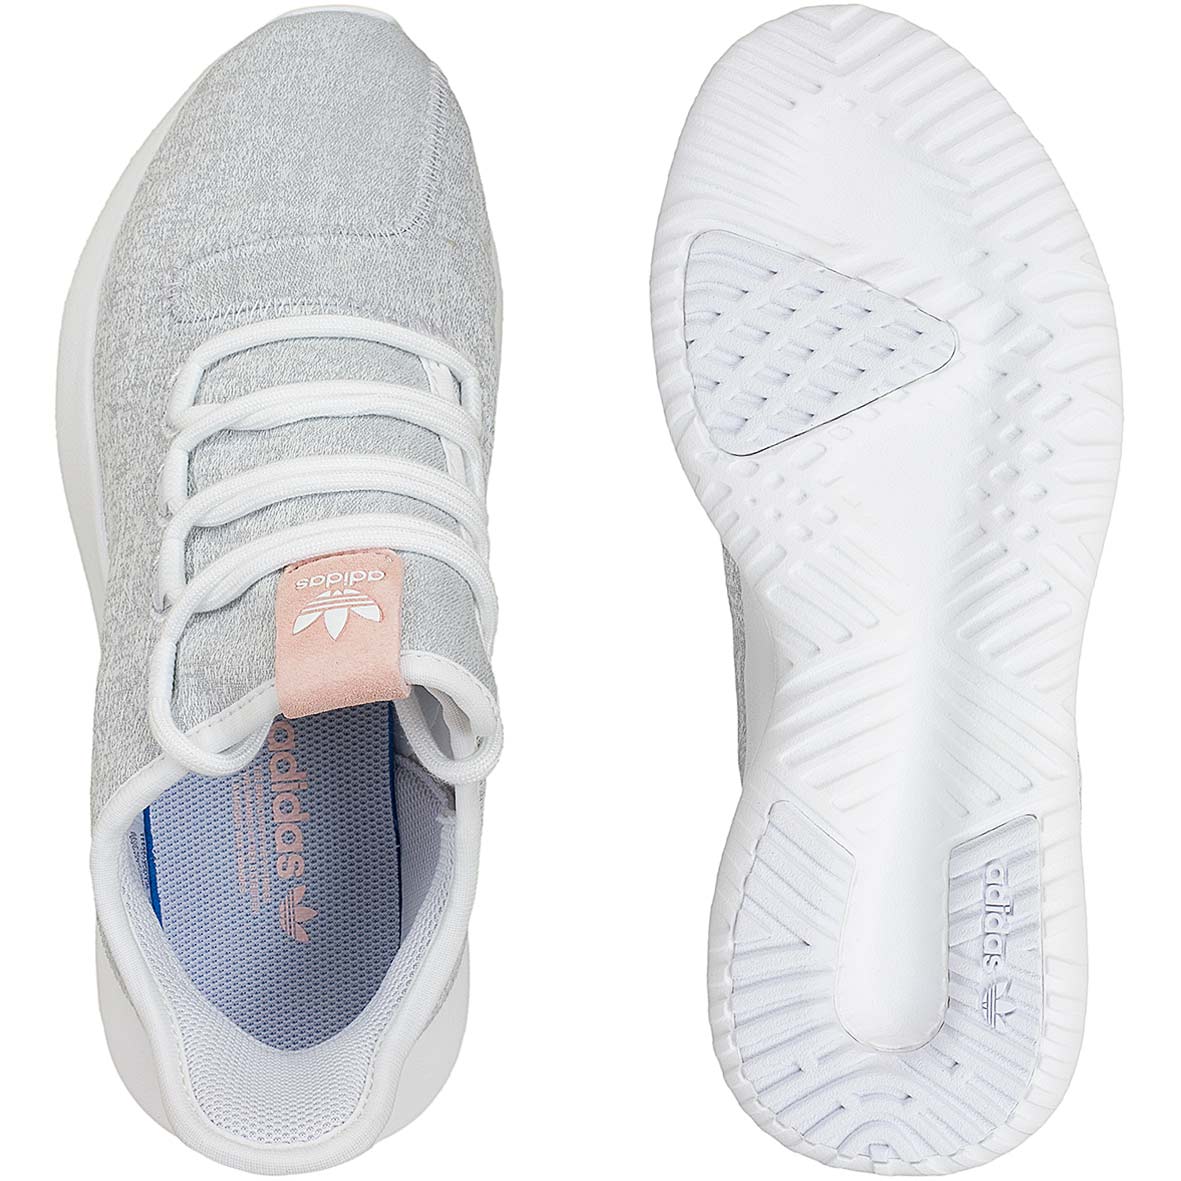 ☆ Adidas Originals Damen Sneaker Tubular Shadow weiß/grau - hier bestellen!